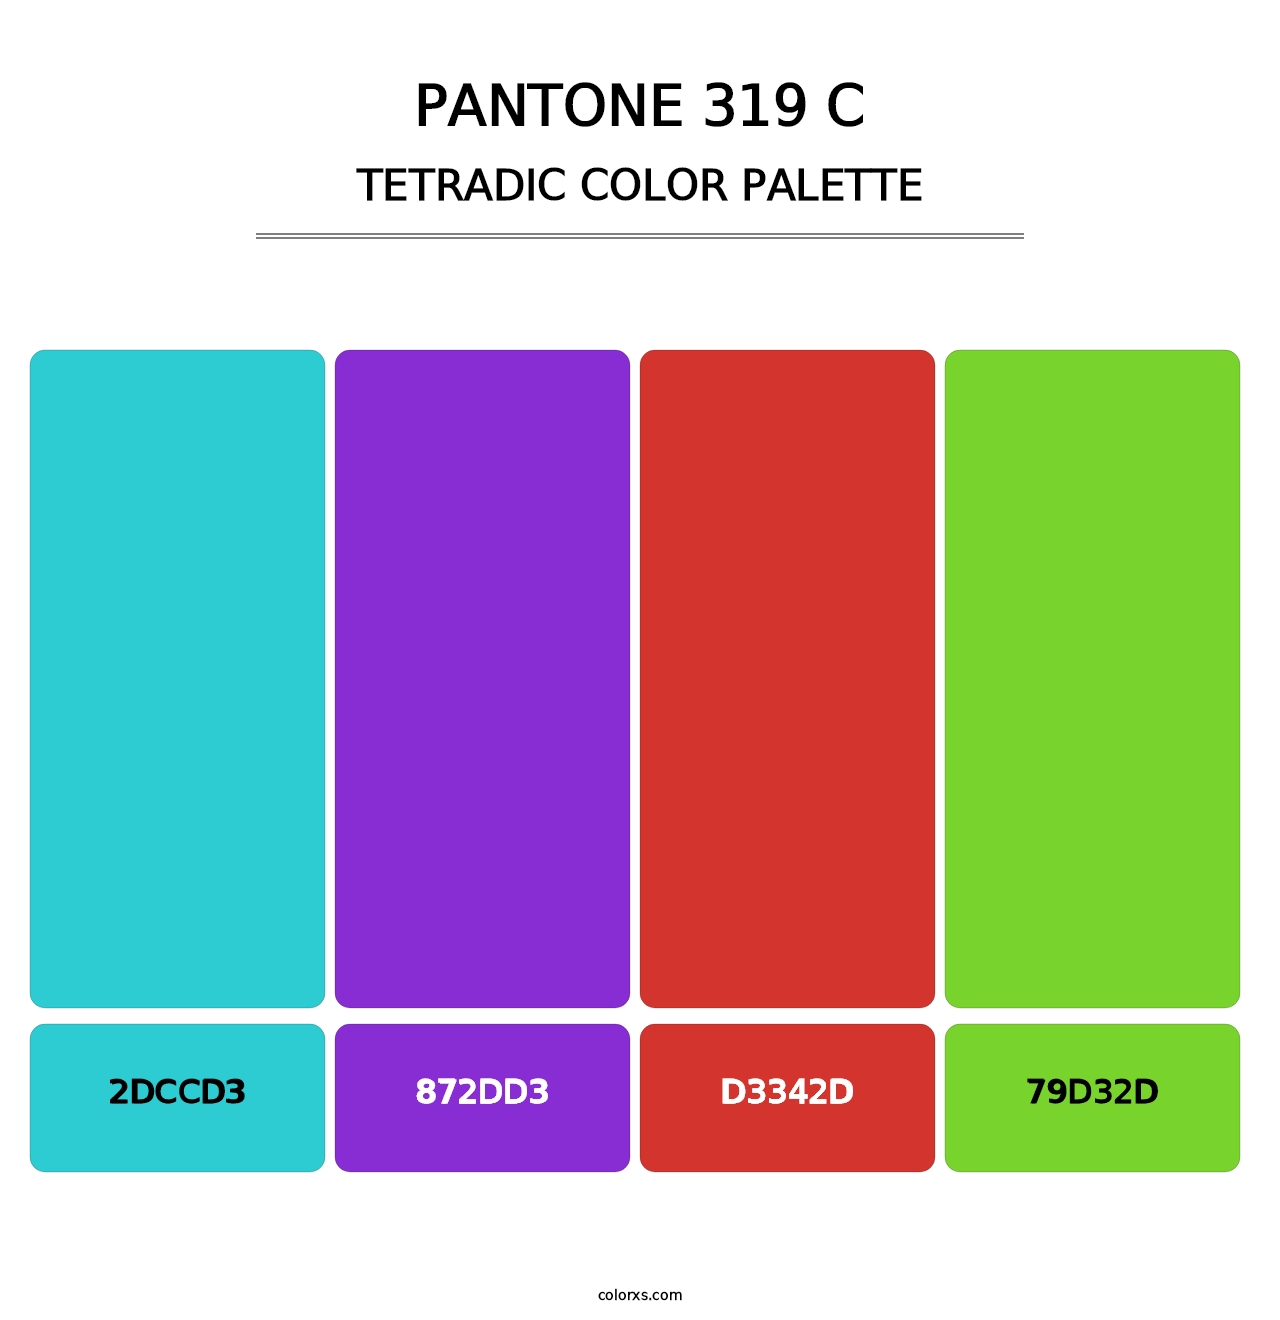 PANTONE 319 C - Tetradic Color Palette